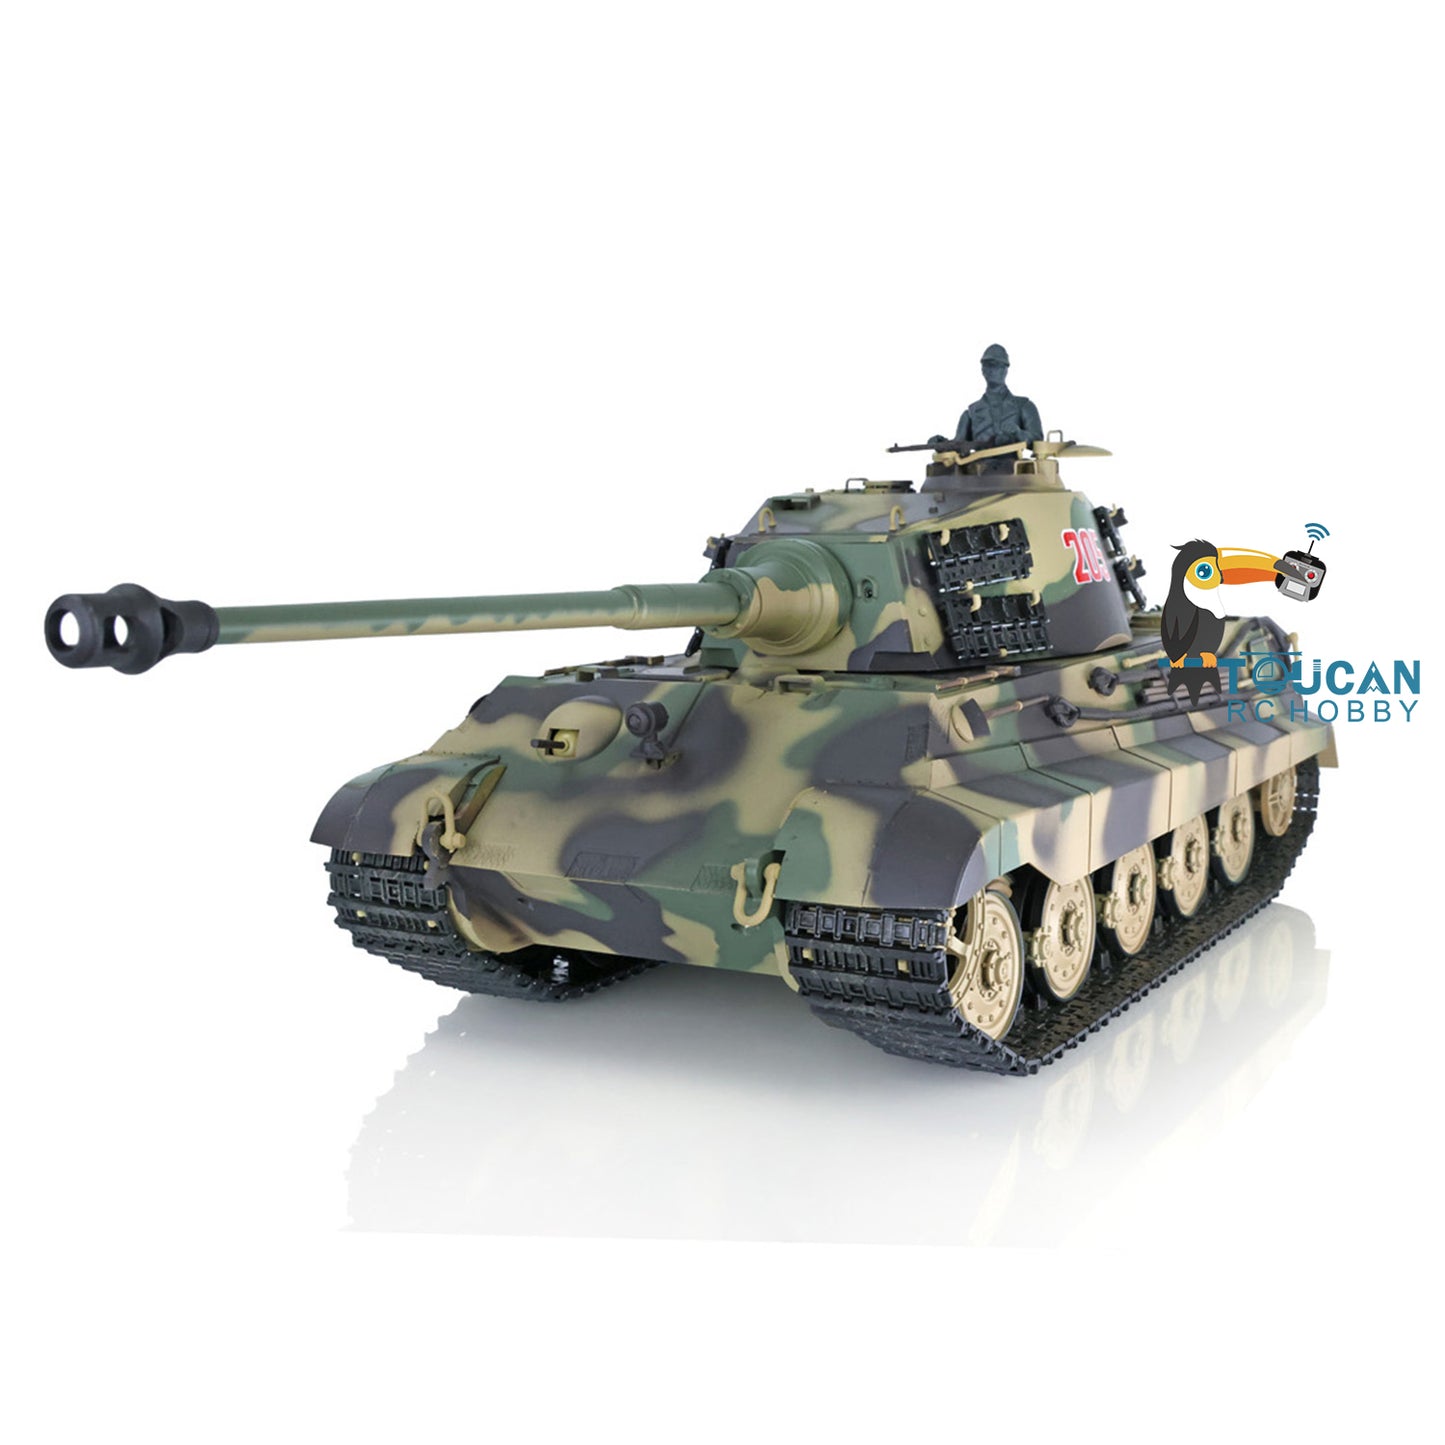 1/16 Henglong TK7.0 RC Tank Model 3888A King Tiger Plastic 2.4G German Tank Model w/ FPV 360 Degrees Rotating Turret Barrel Recoil